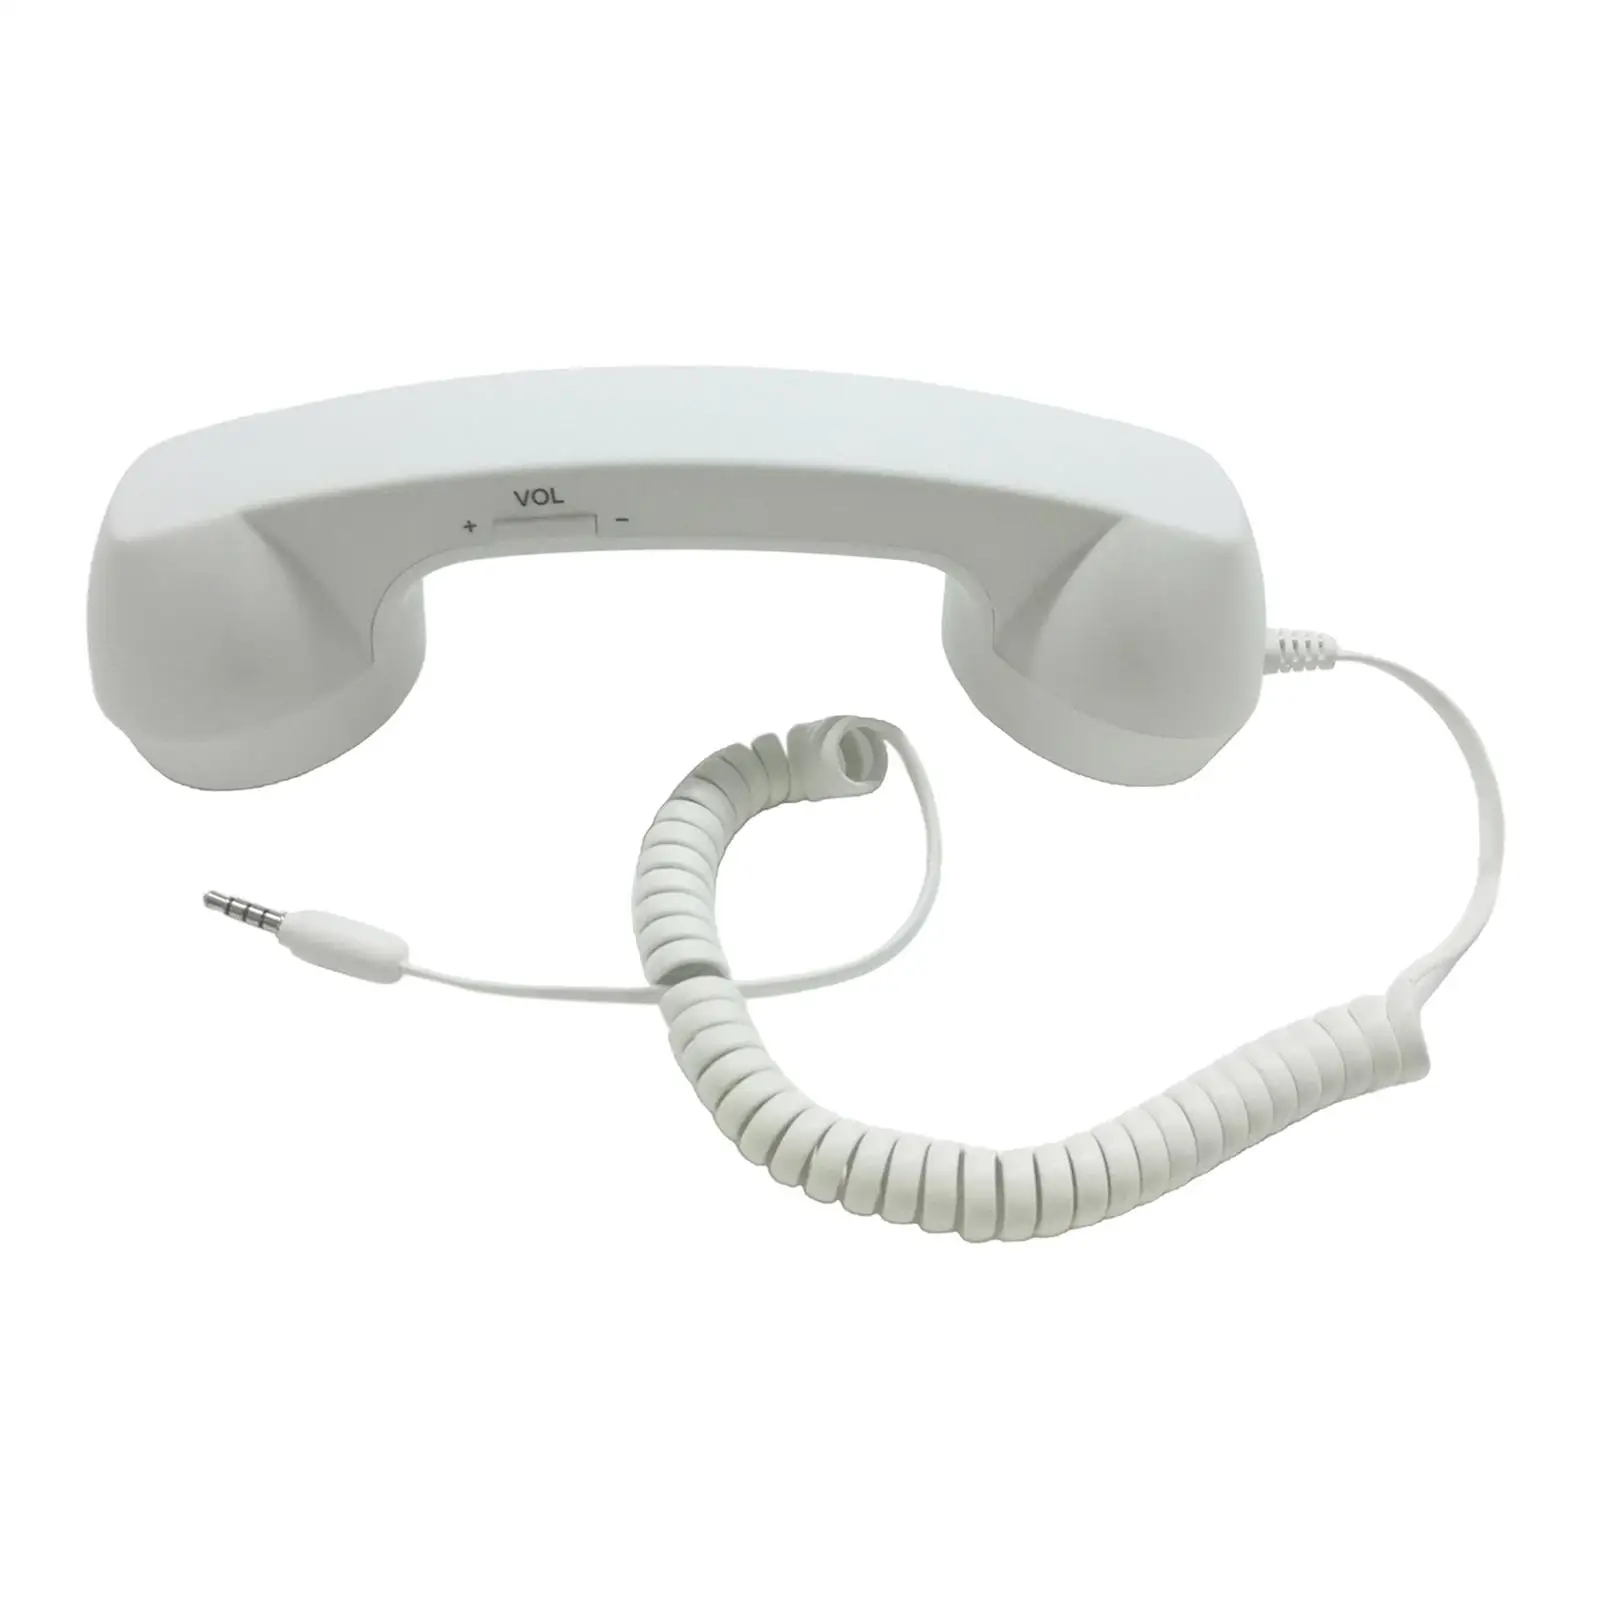 Retro Telephone Handset 3.5mm,  Stylish Mini Phone Call Receiver Microphone Speaker for 